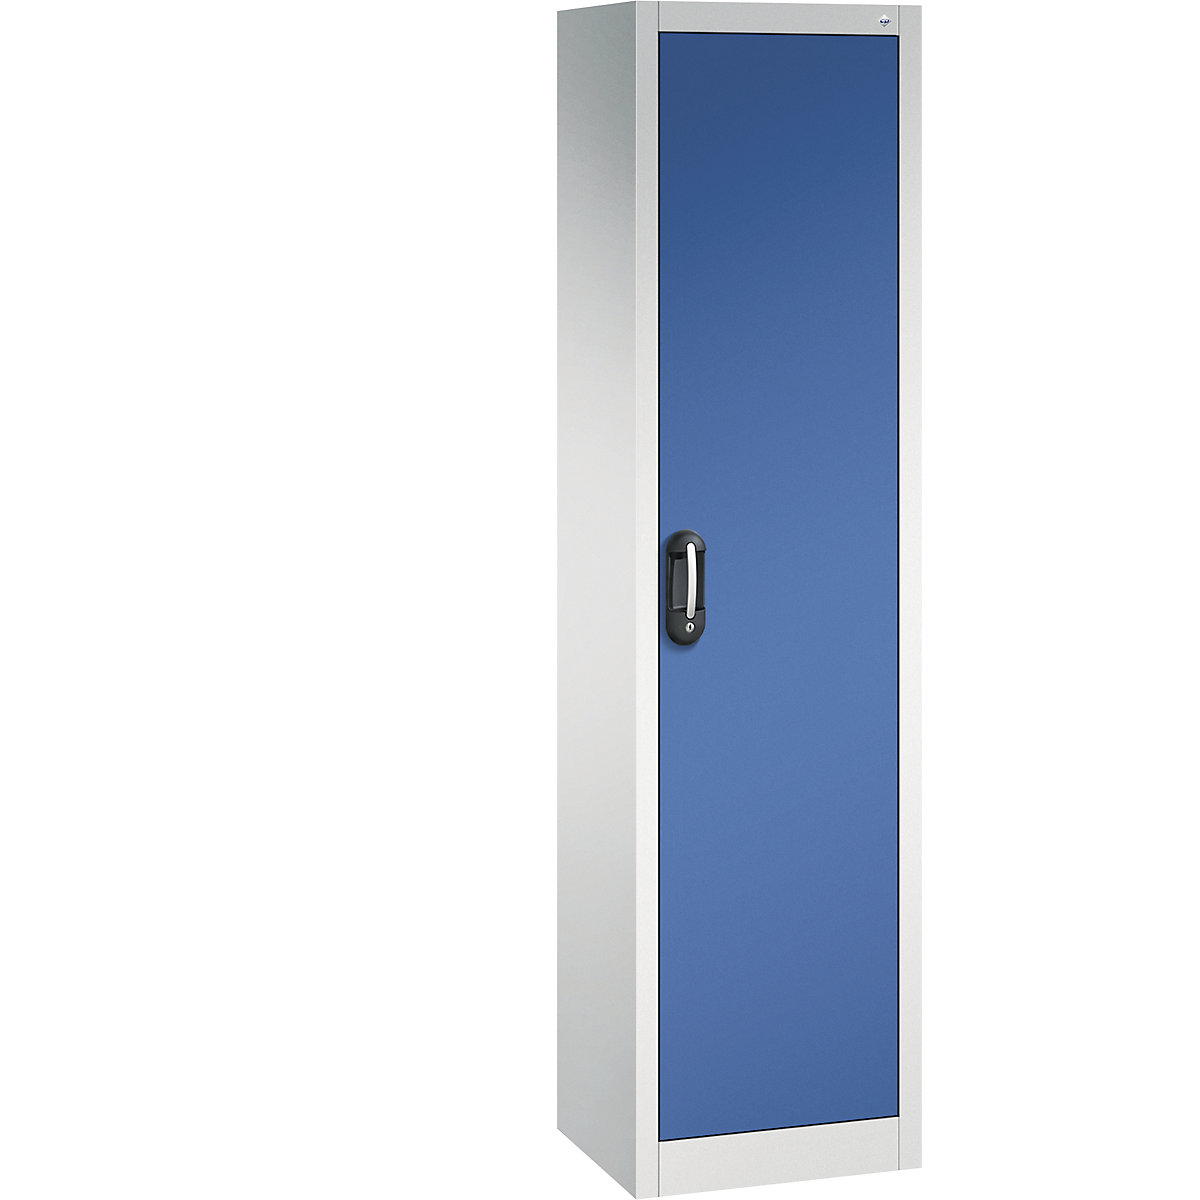 ACURADO universal cupboard – C+P, WxD 500 x 400 mm, light grey / gentian blue-18